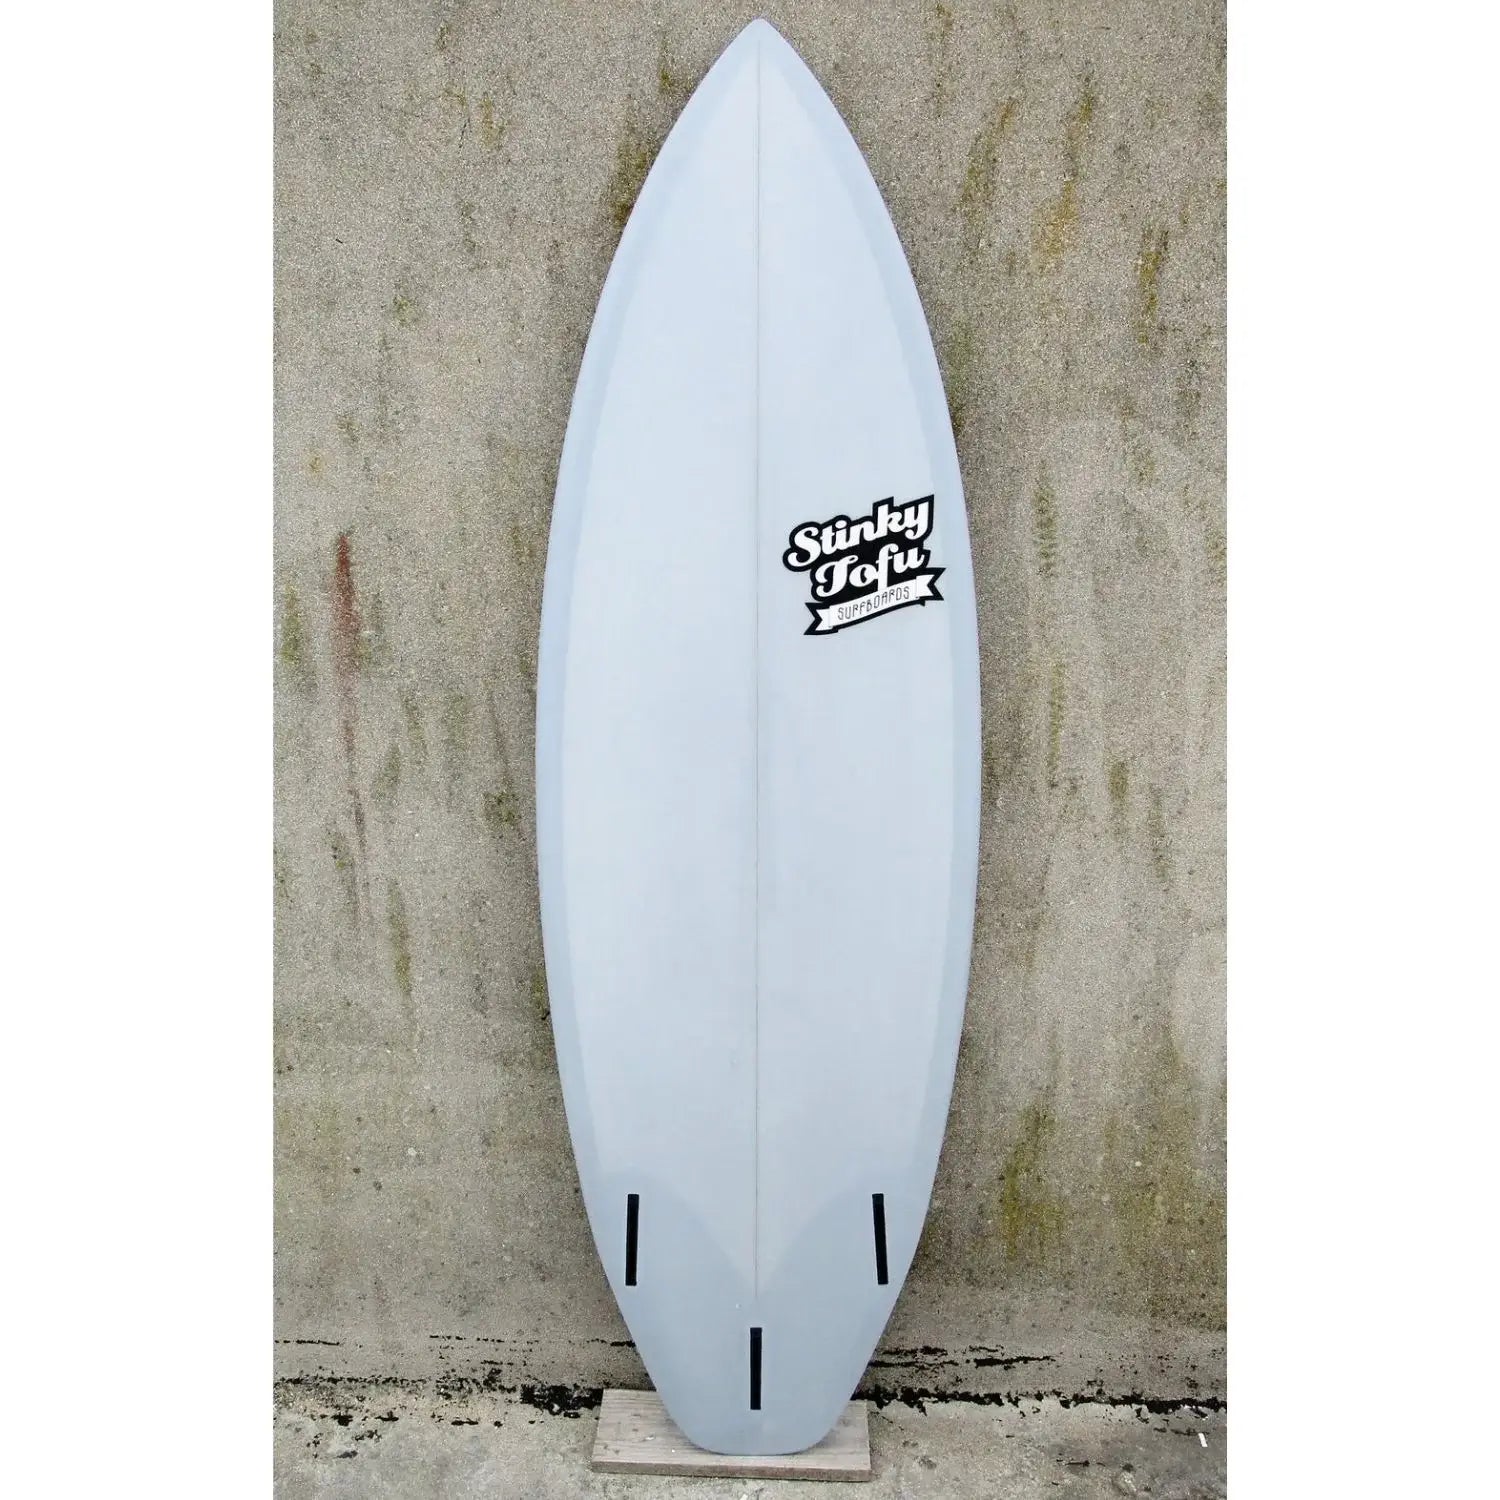 BEACH BUM — STINKY TOFU SURFBOARDS